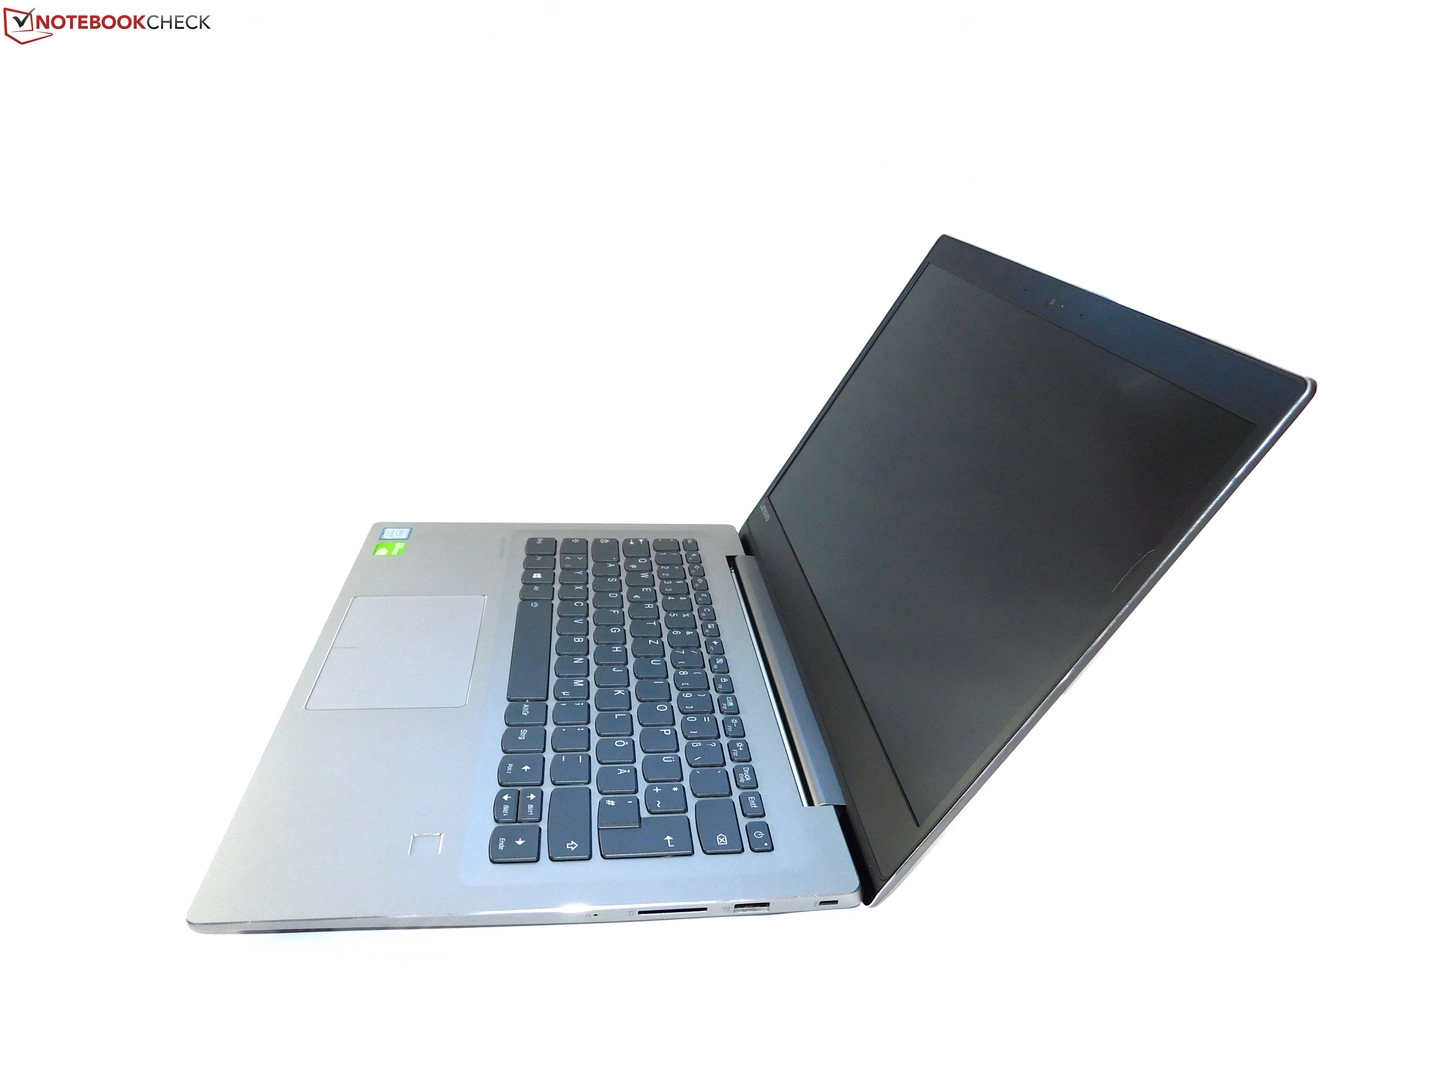 Lenovo Ideapad 520S-14IKB laptop image